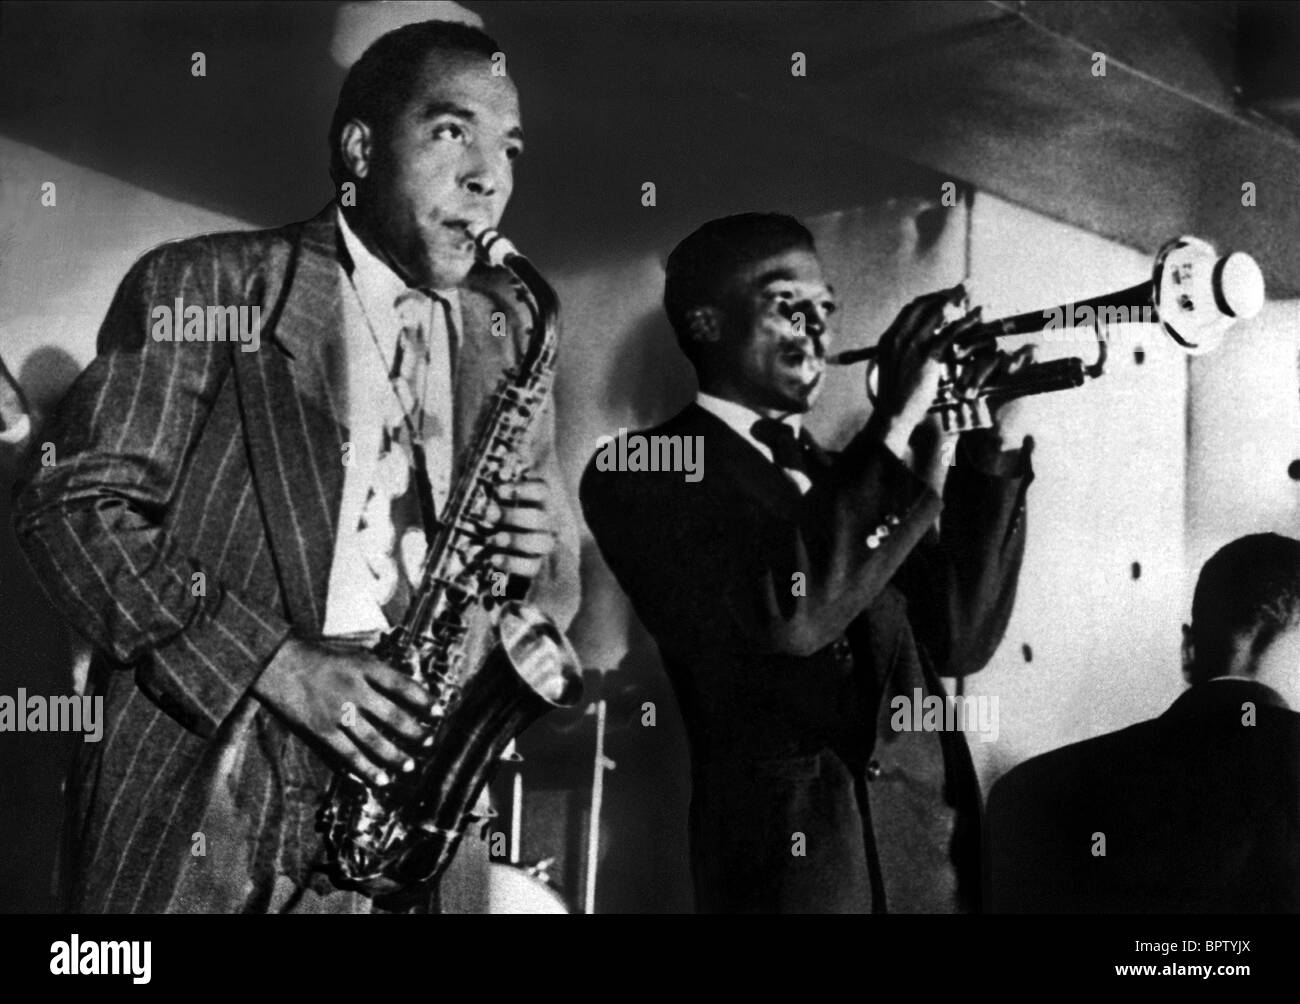 CHARLIE PARKER & MILES DAVIS JAZZ MUSICIANS (1945 Stock Photo - Alamy